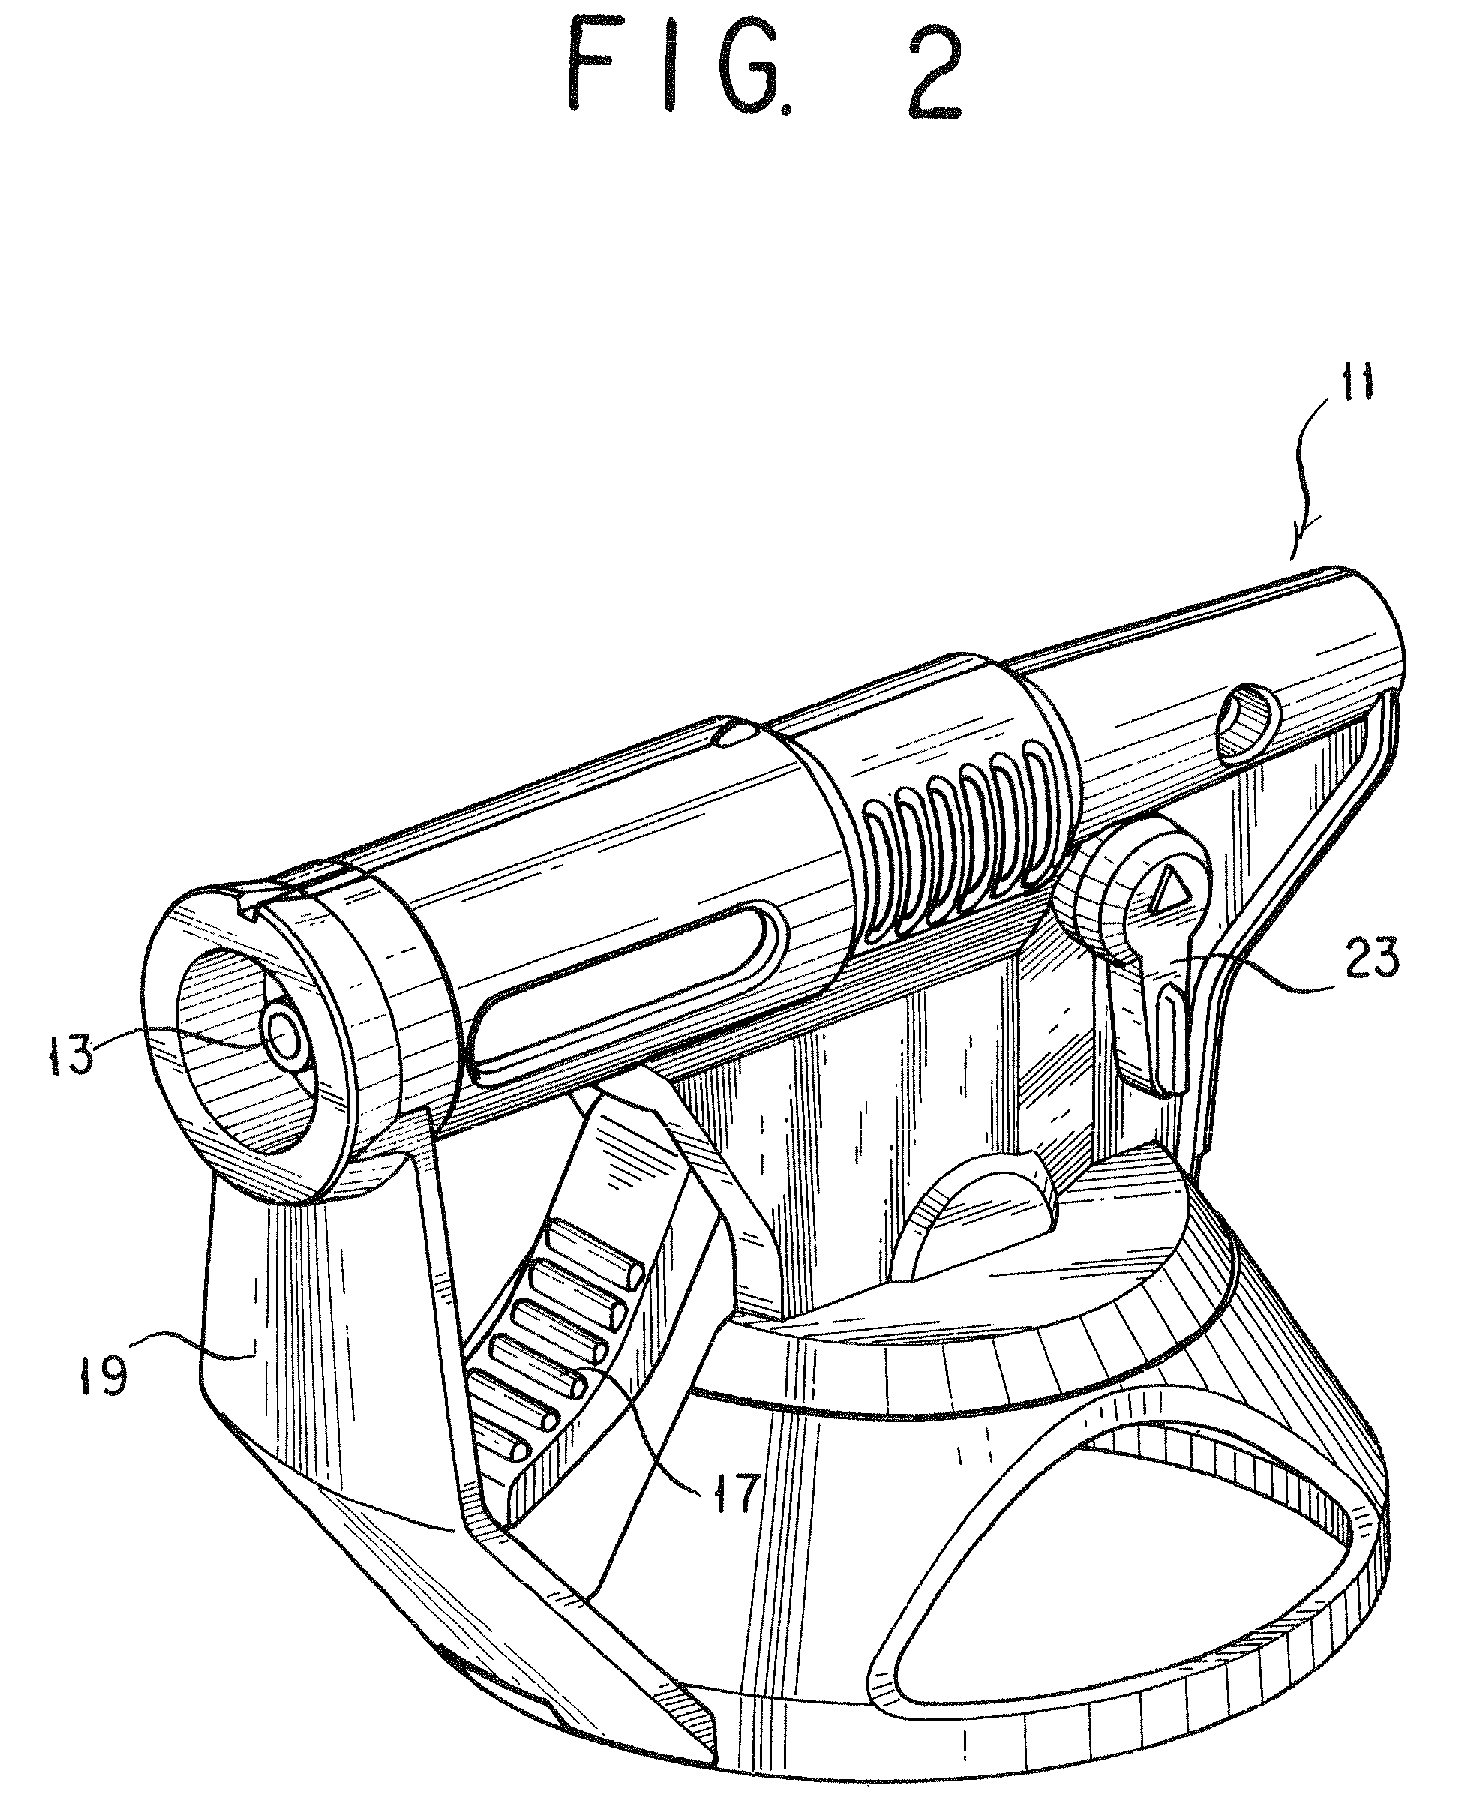 Trigger type head cap for an aerosol sprayer